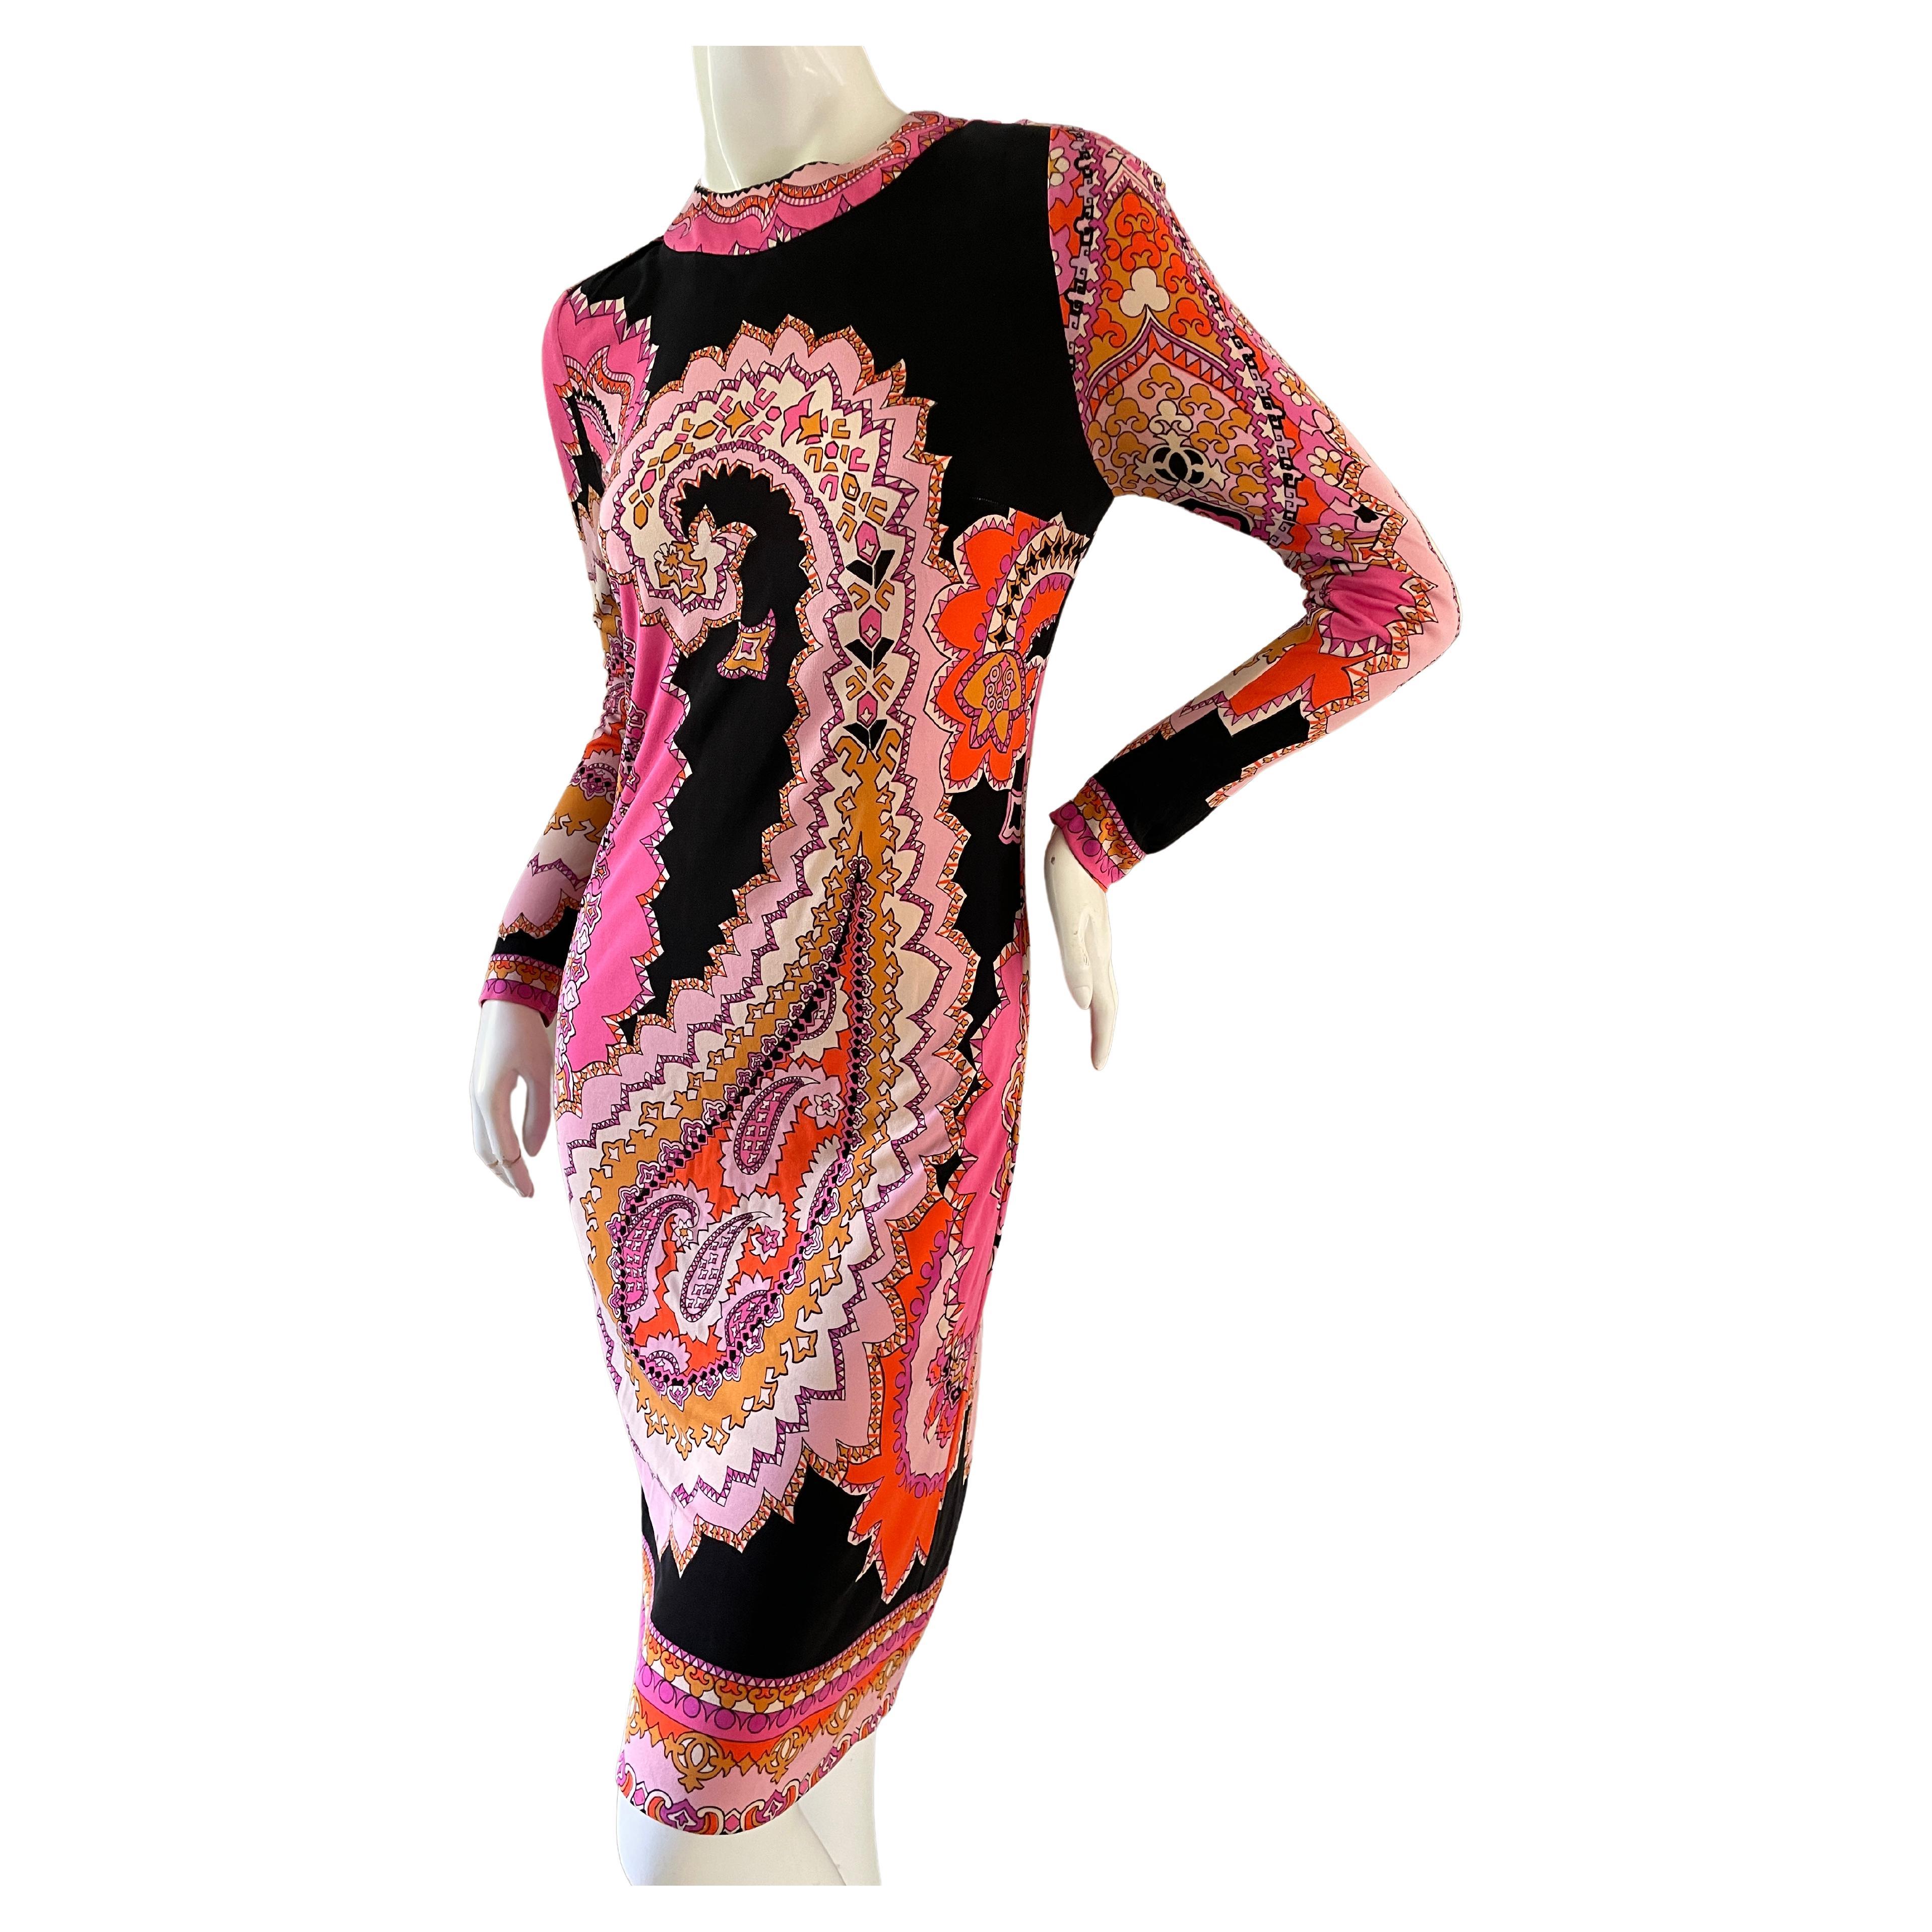  Leonard Paris Vintage 70's Pink Paisley Print Silk Jersey Dress For Sale